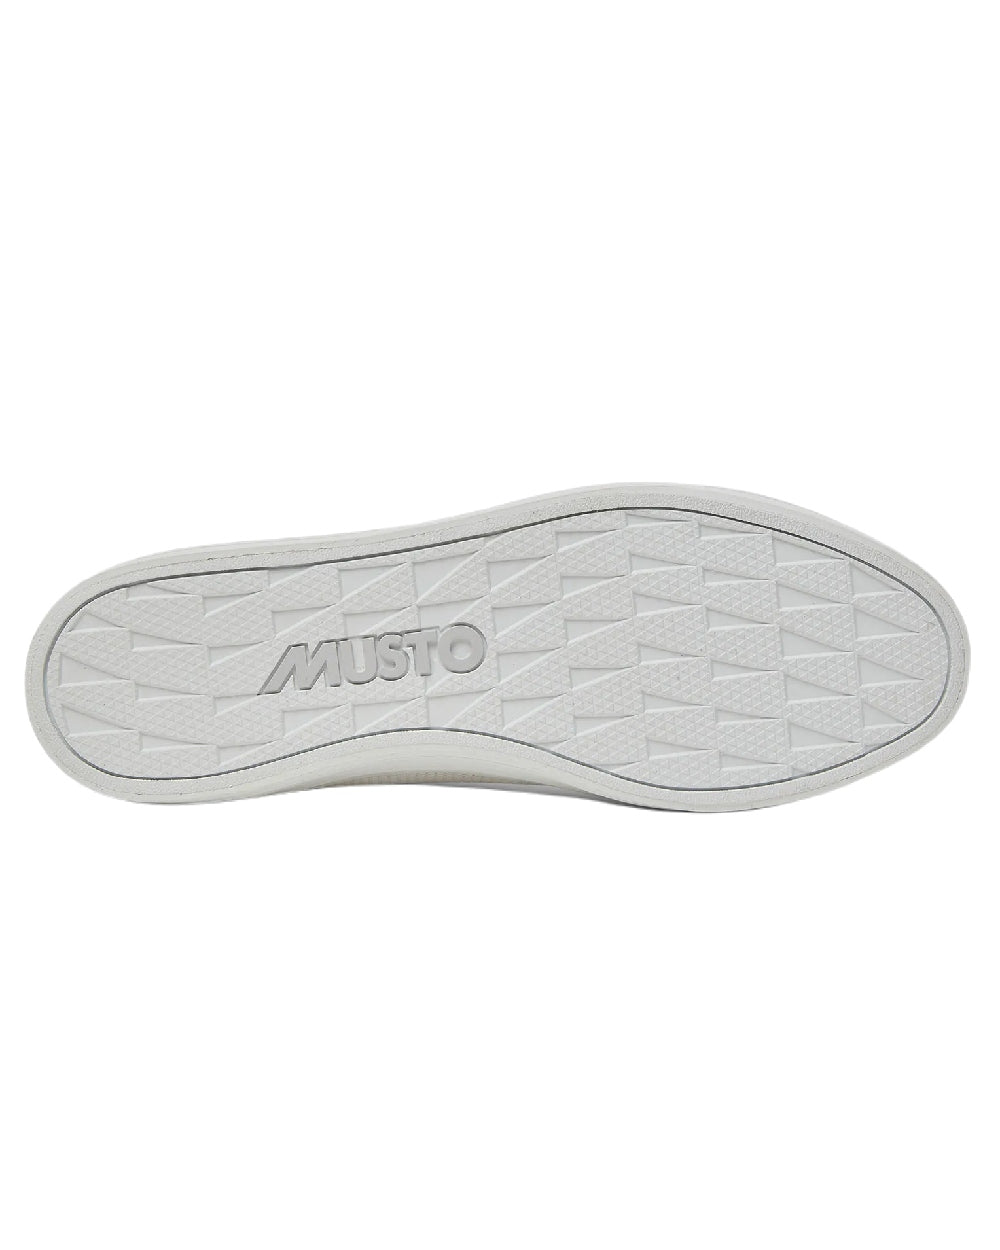 Musto Nautic Zephyr Shoe in White 